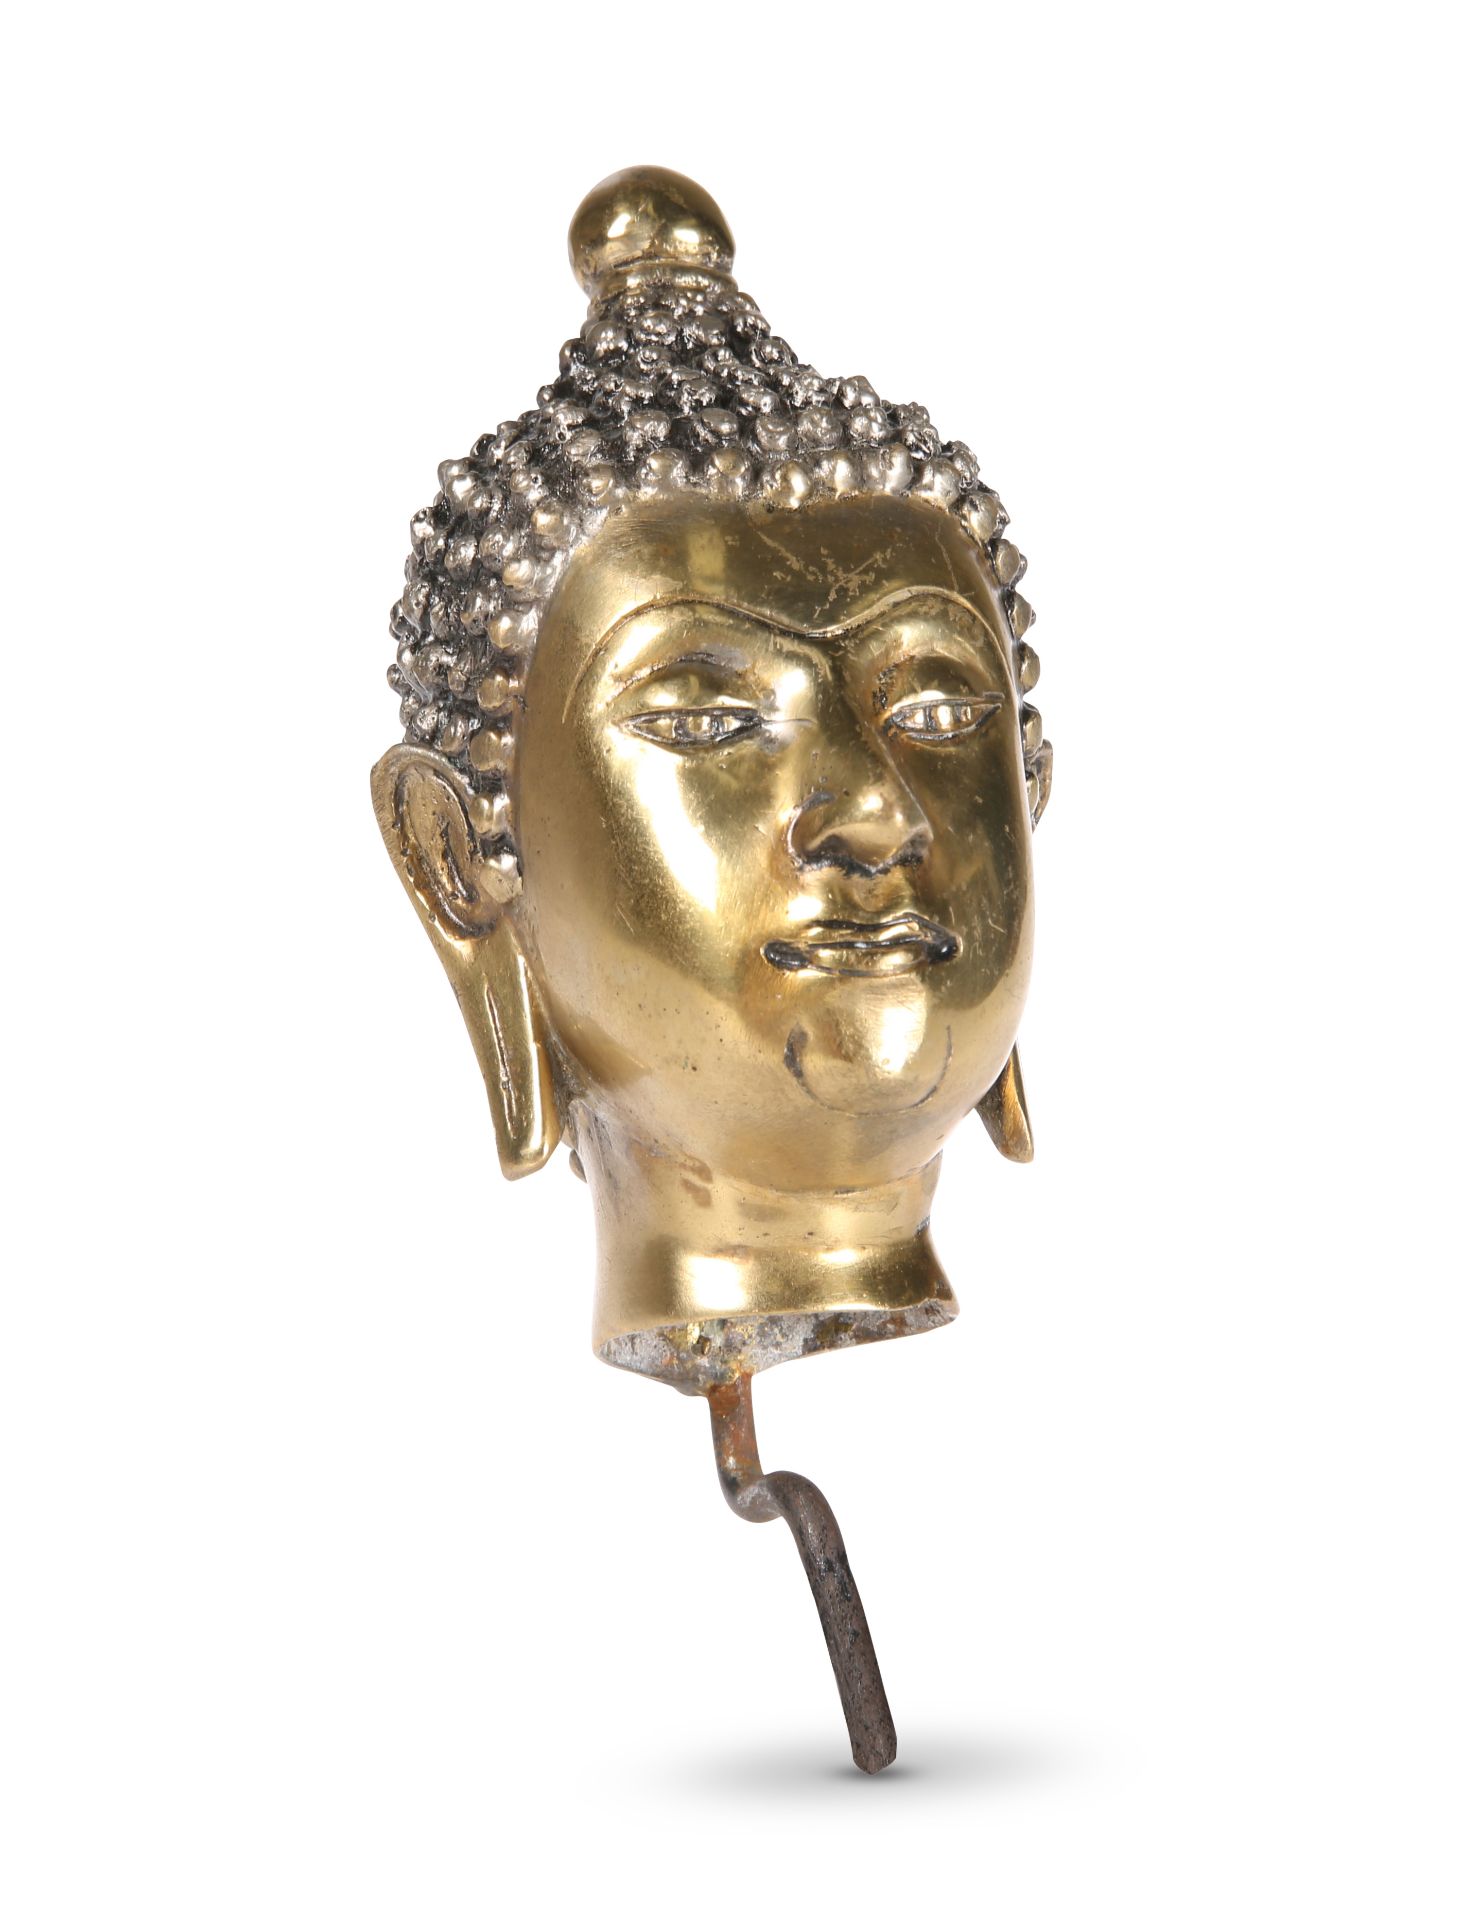 A CAST BRONZE HEAD OF A BUDDHA